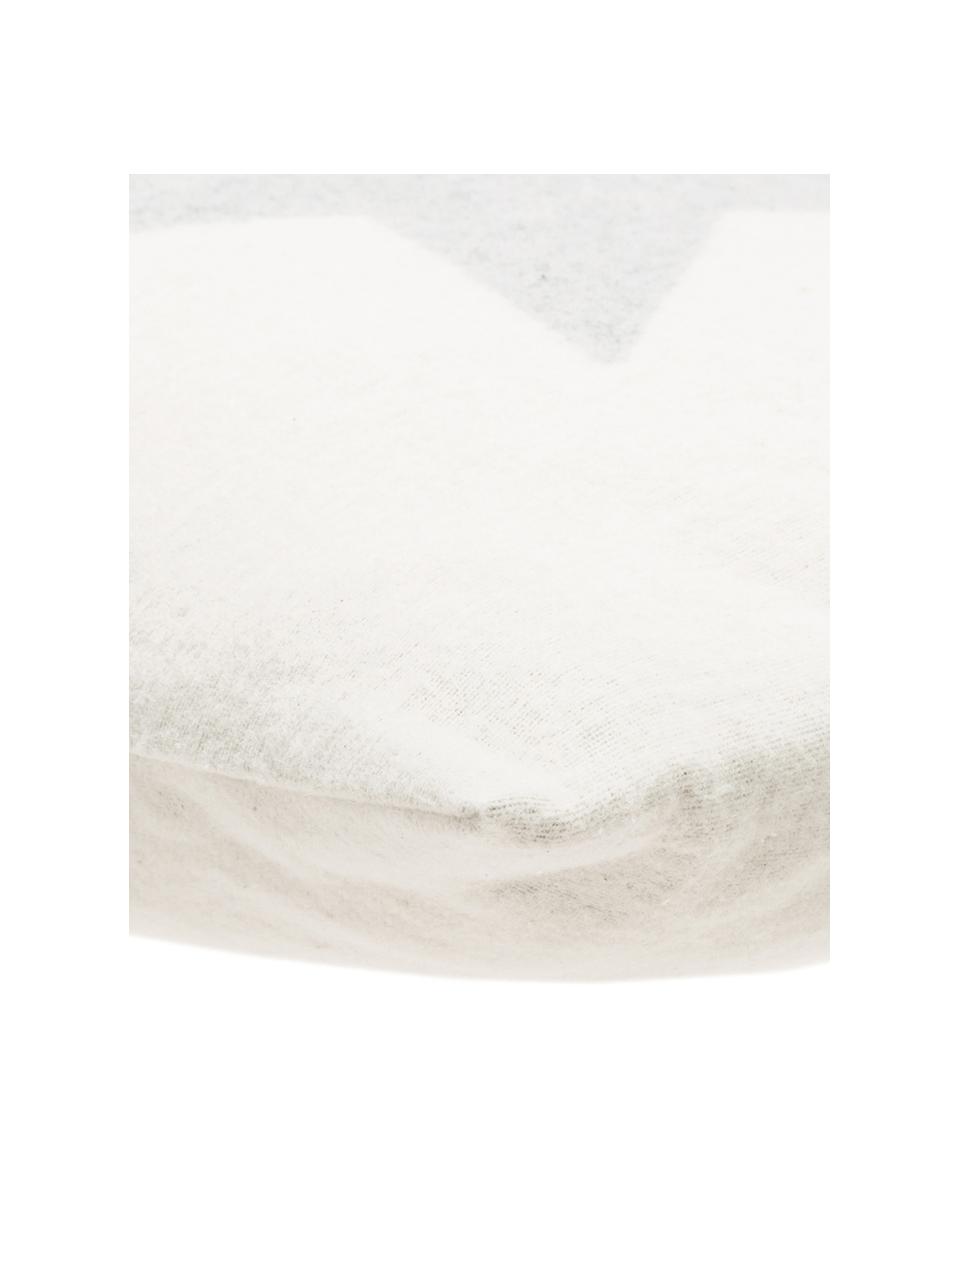 Fleece-Kissenhülle Silvretta mit Stern, 85% Baumwolle, 8% Viskose, 7% Polyacryl, Beige, Grau, 40 x 40 cm